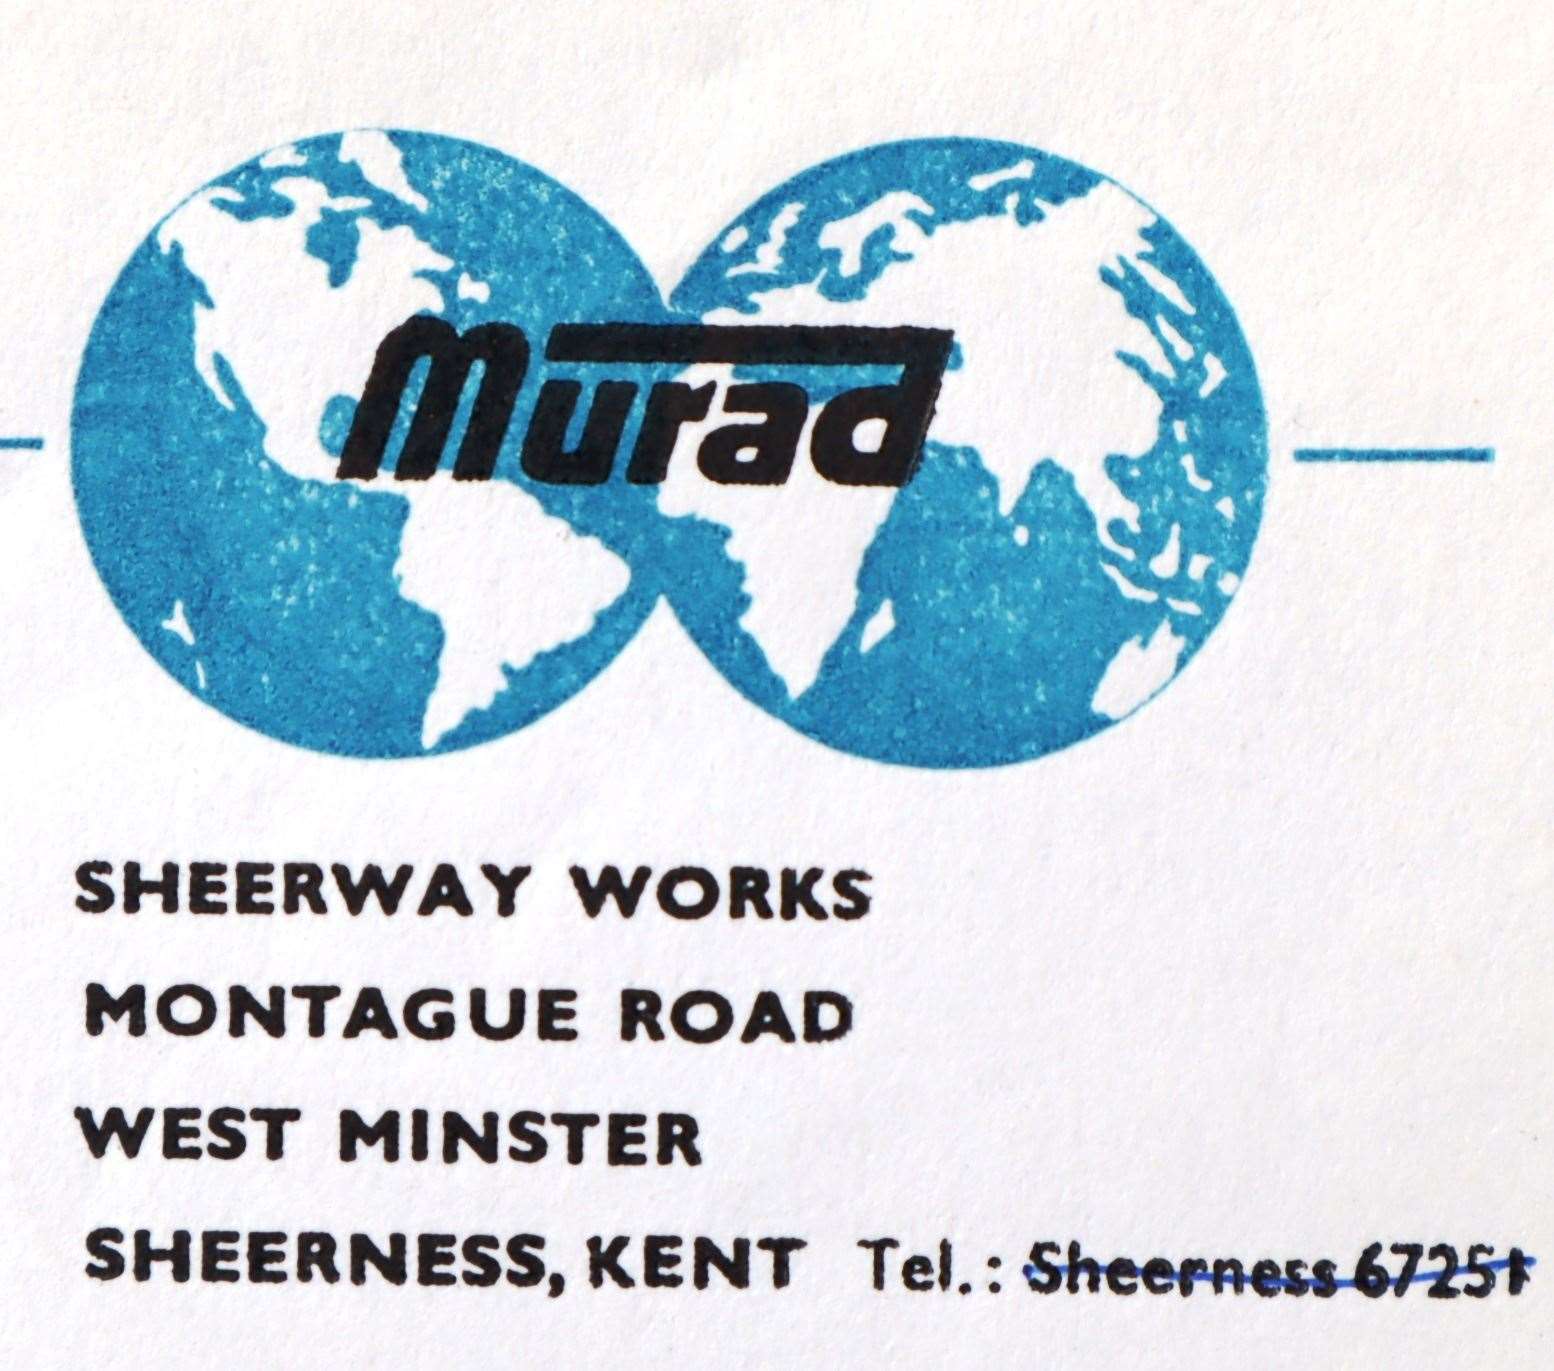 Letter heading for Murad's Sheerway Works (46173466)